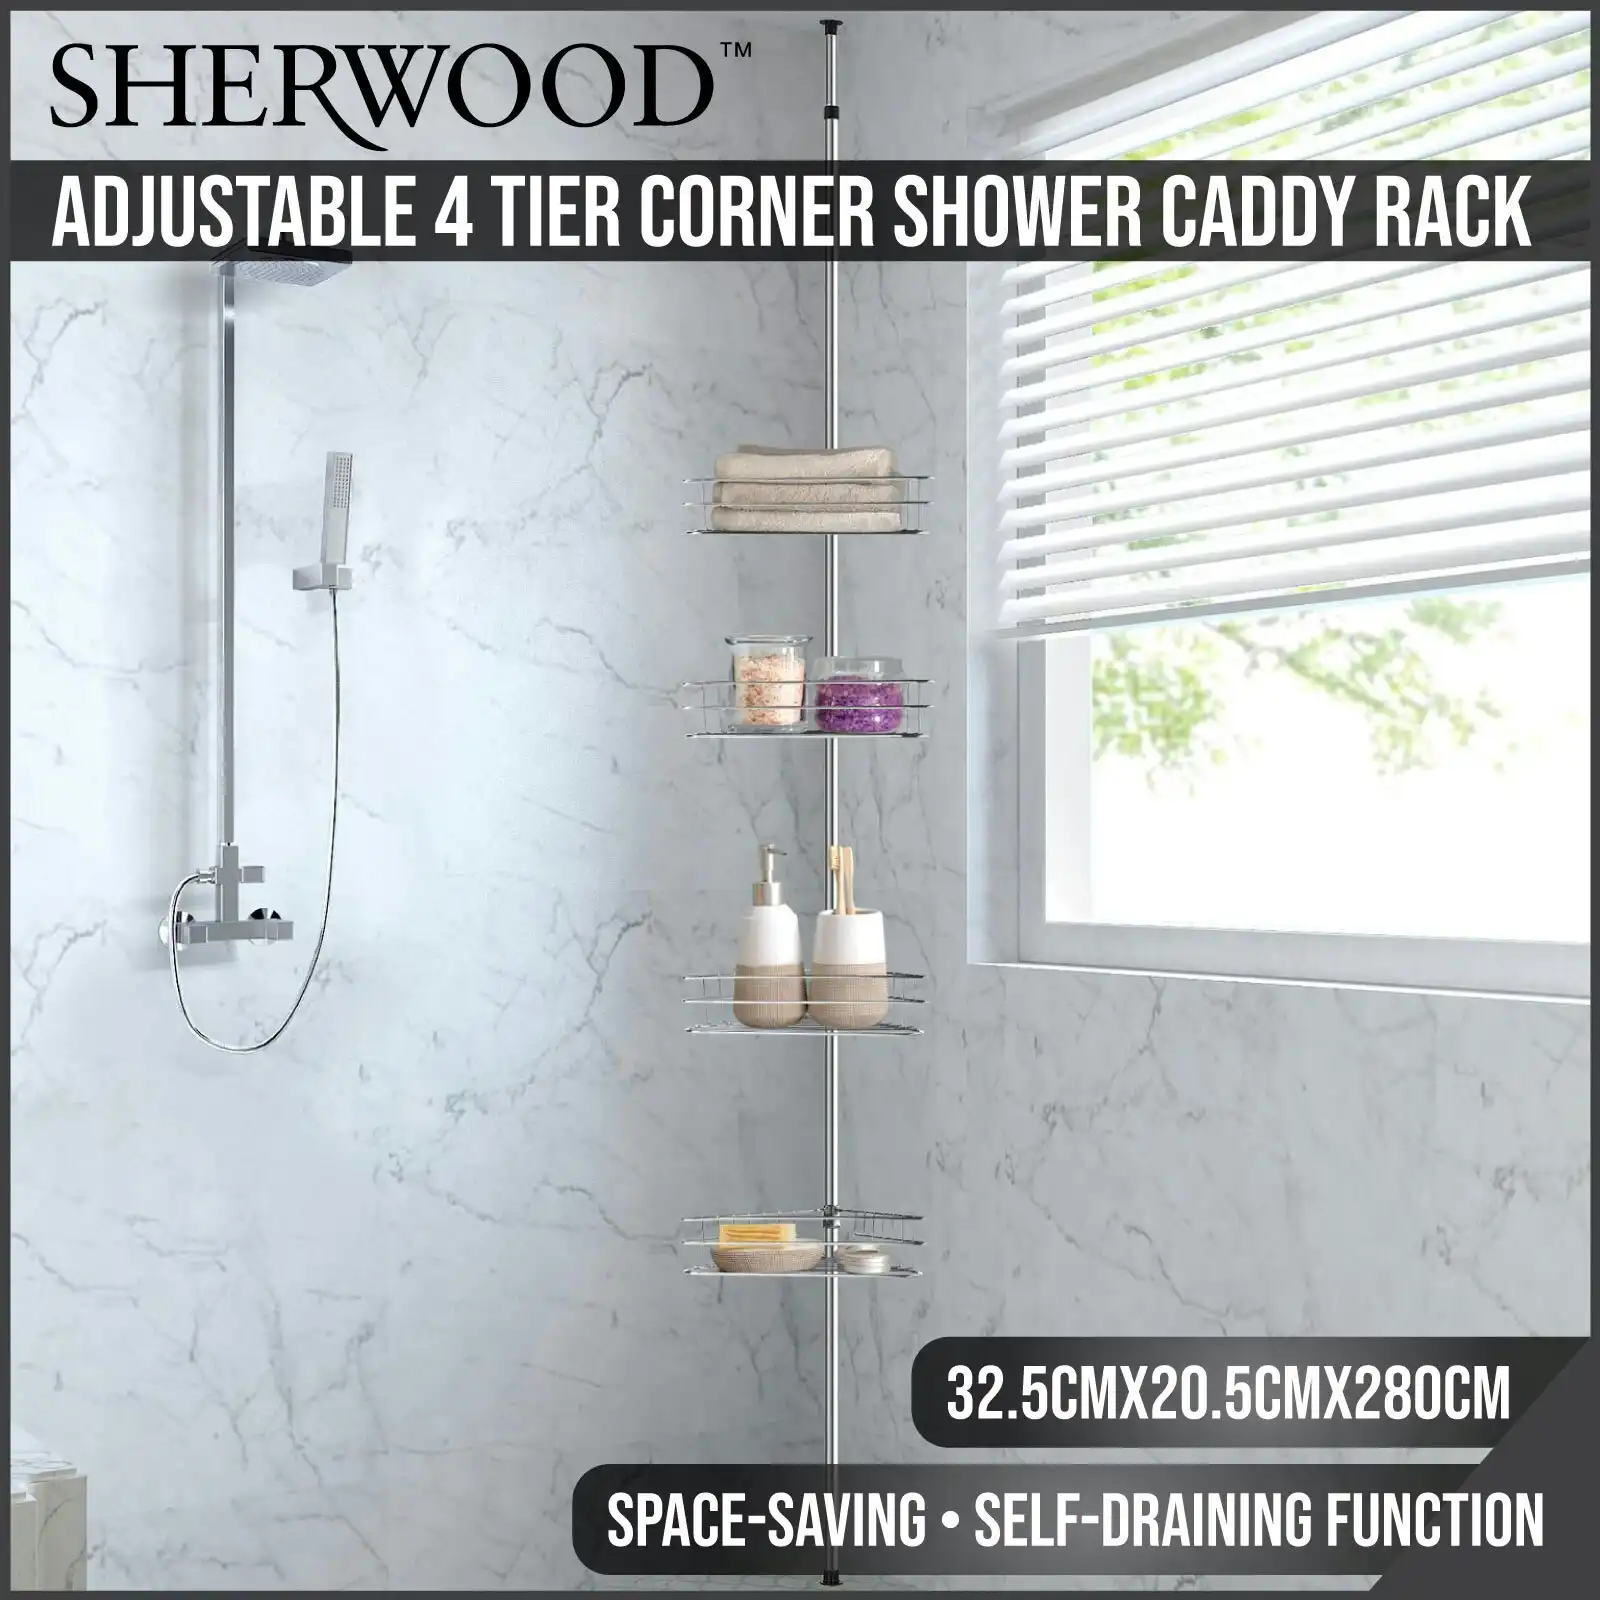 Sherwood Home Adjustable Telescopic 4 Tier Corner Shower Caddy Rack Silver